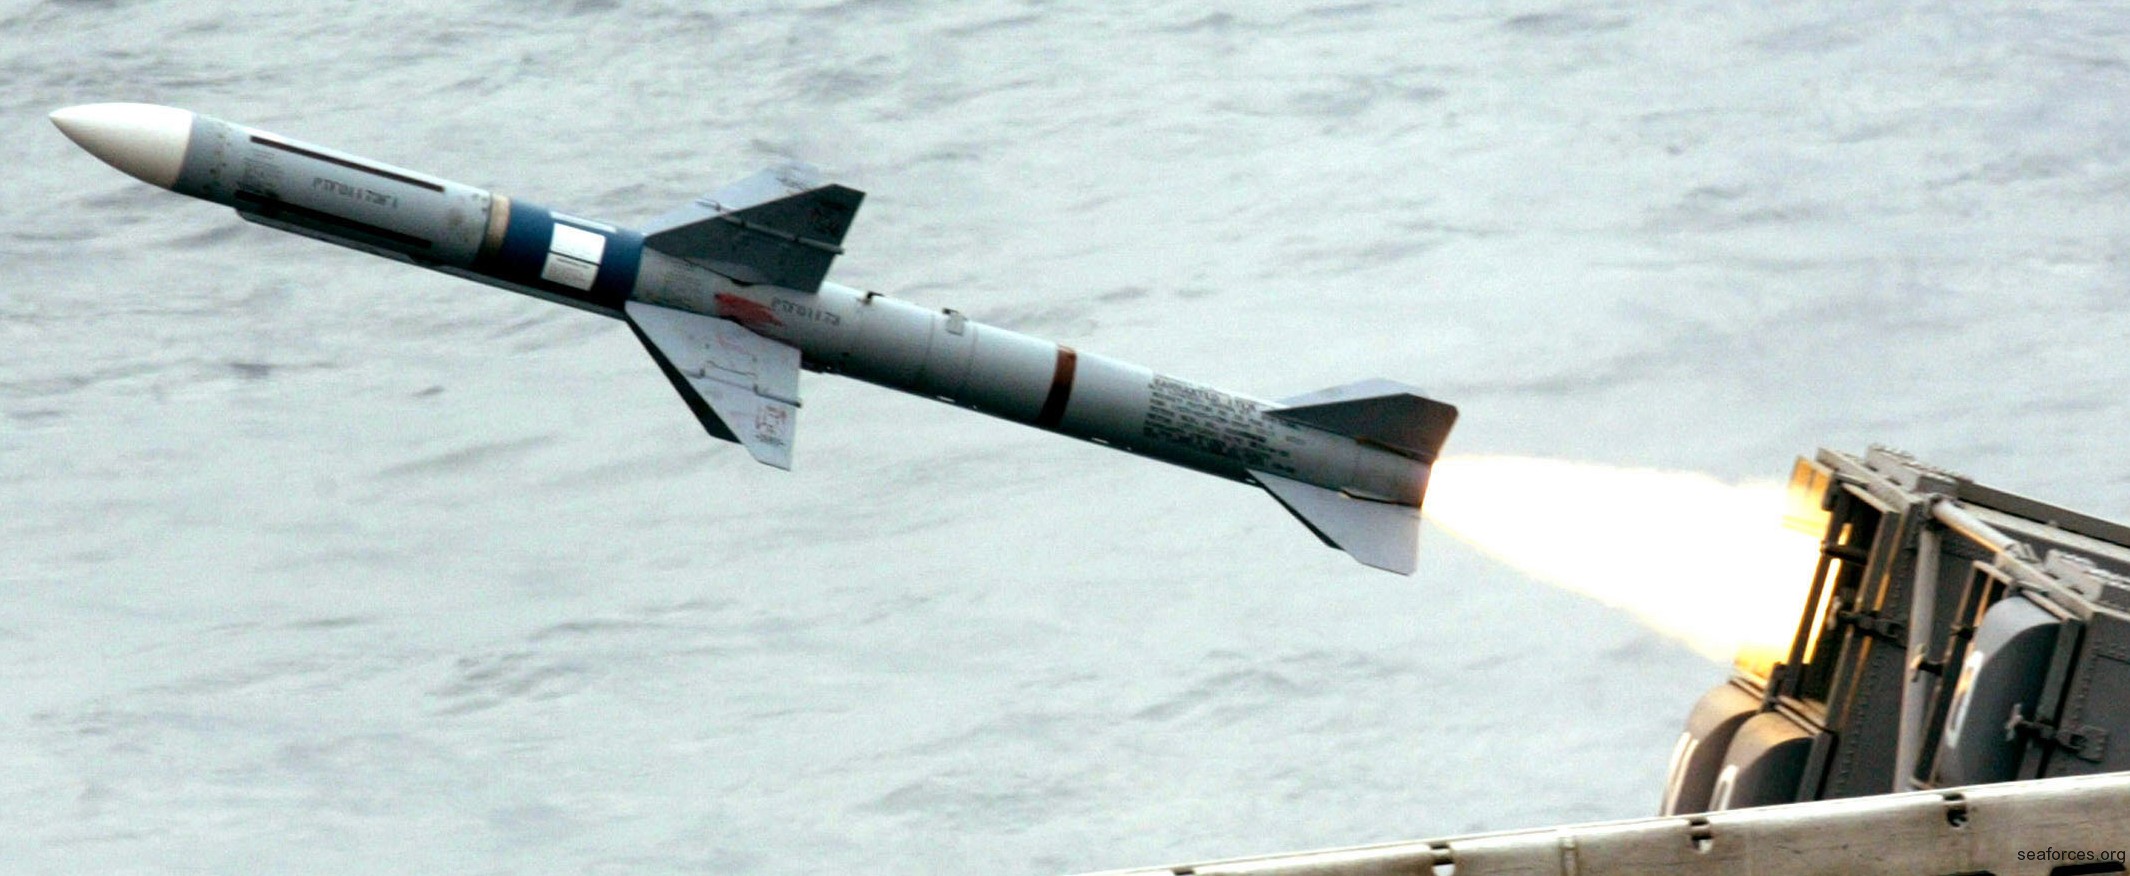 rim-7 sea sparrow missile nato nssm sam bpdms nato 02b